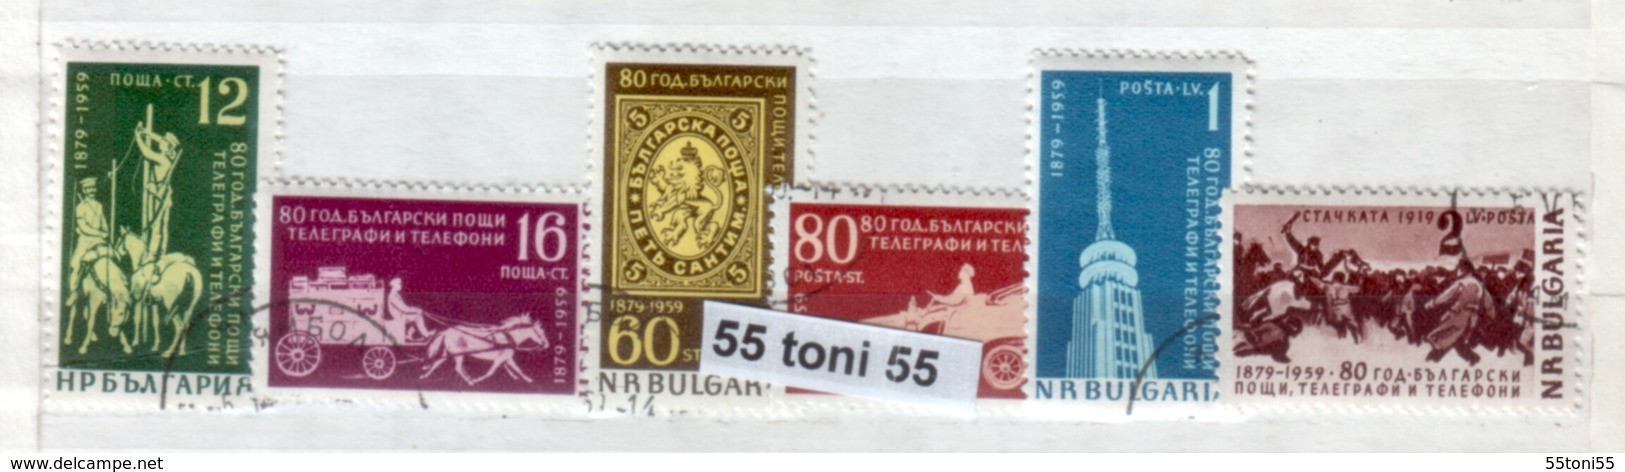 1959 80 Anniversaire De La Poste ( Chevaux - Cavalli) 6v. - Oblitere/used (O)Bulgarien / Bulgaria - Gebraucht